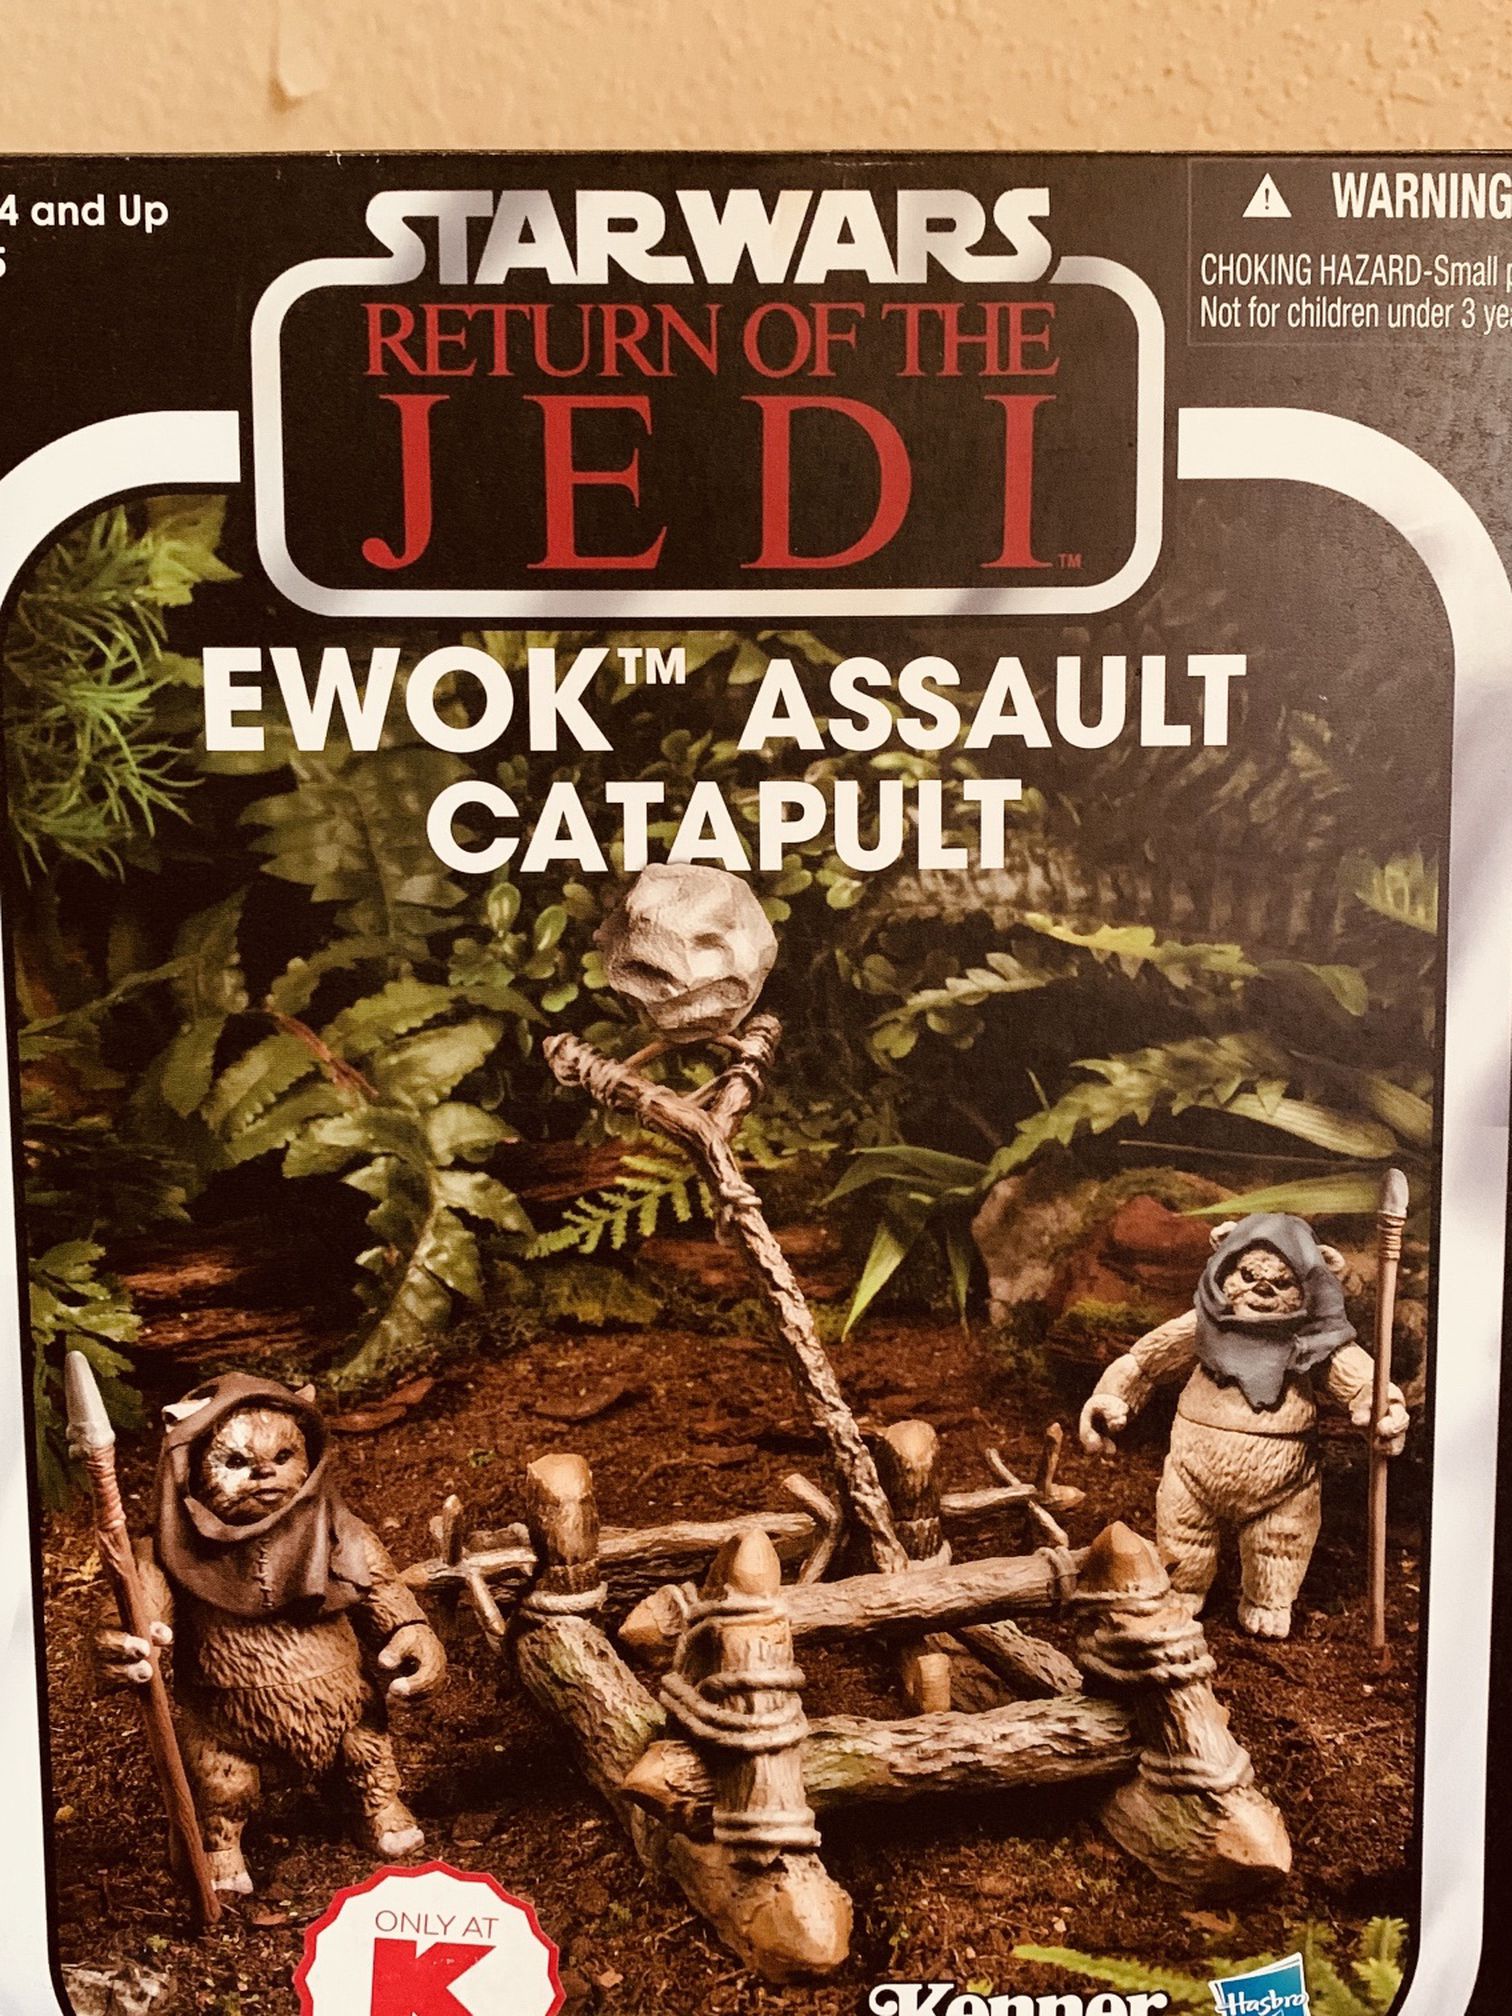 Star Wars The Vintage Collection Ewok Assault Catapult Kmart Return Of The Jedi